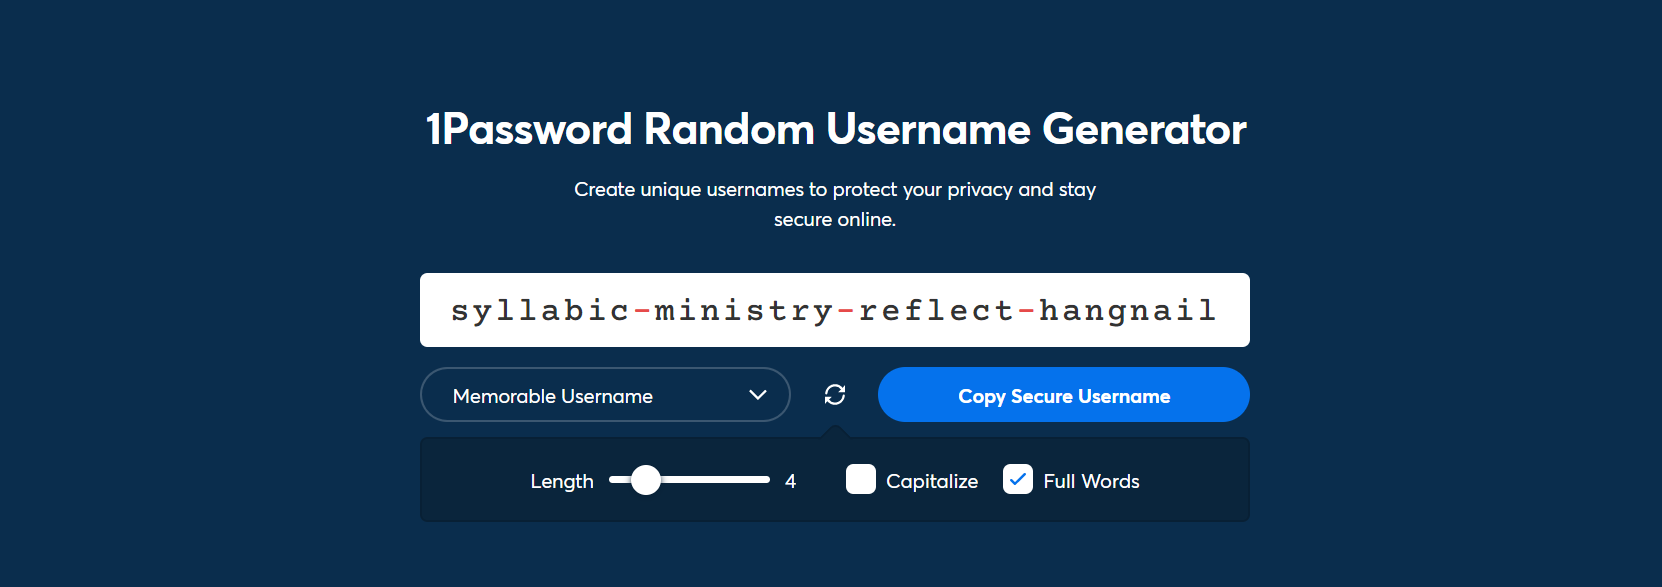 1Password Random Username Generator